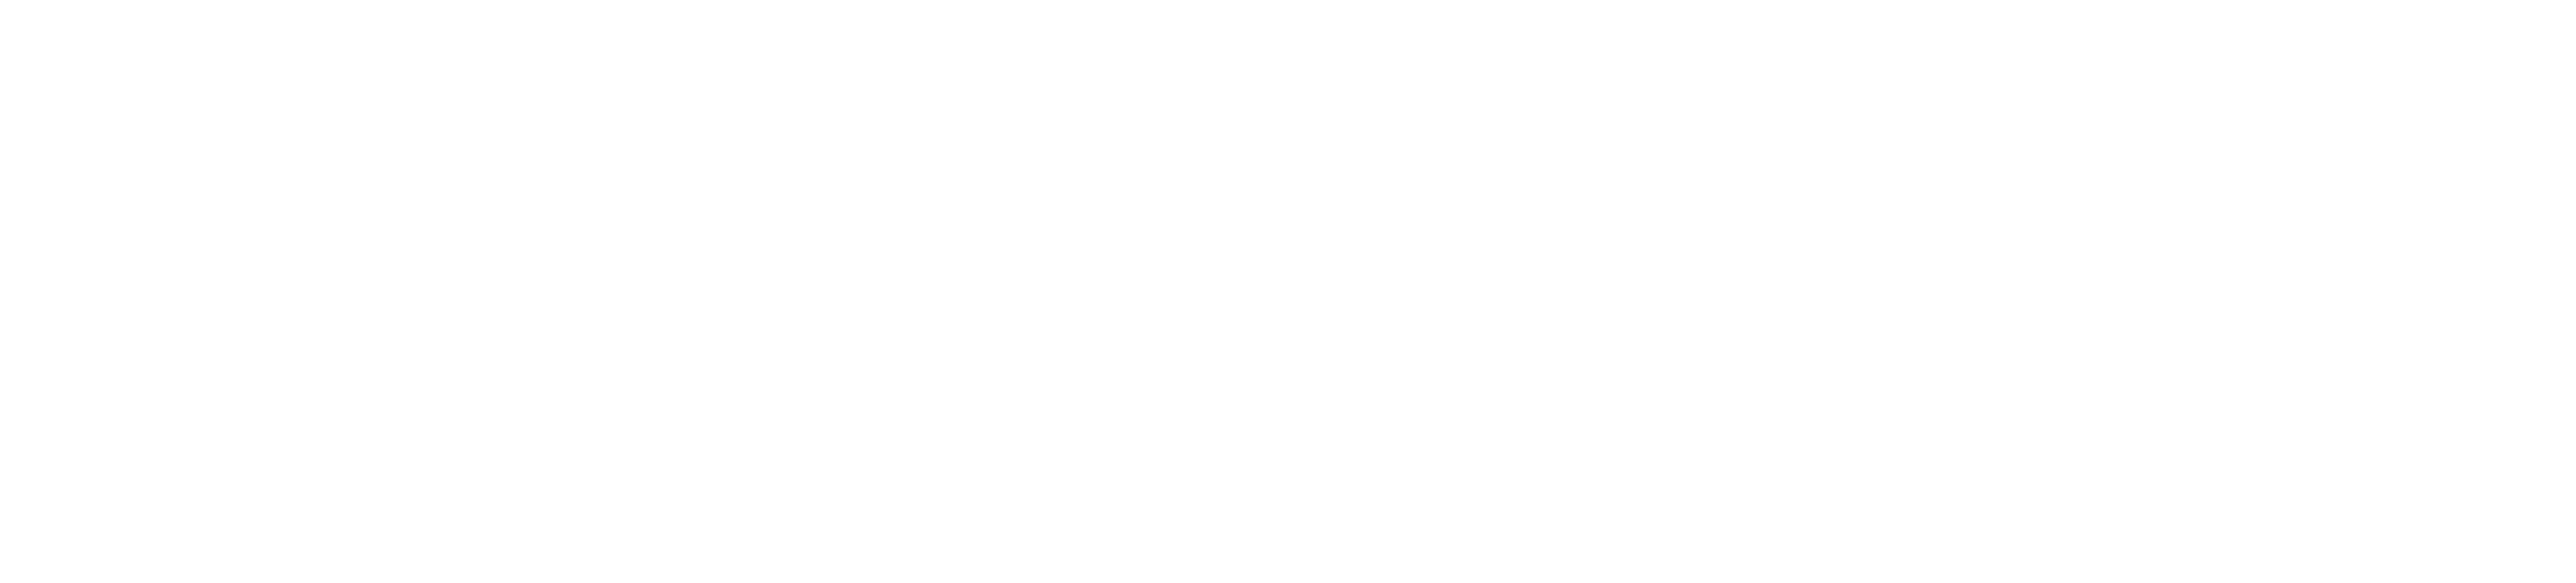 Sotoblanco